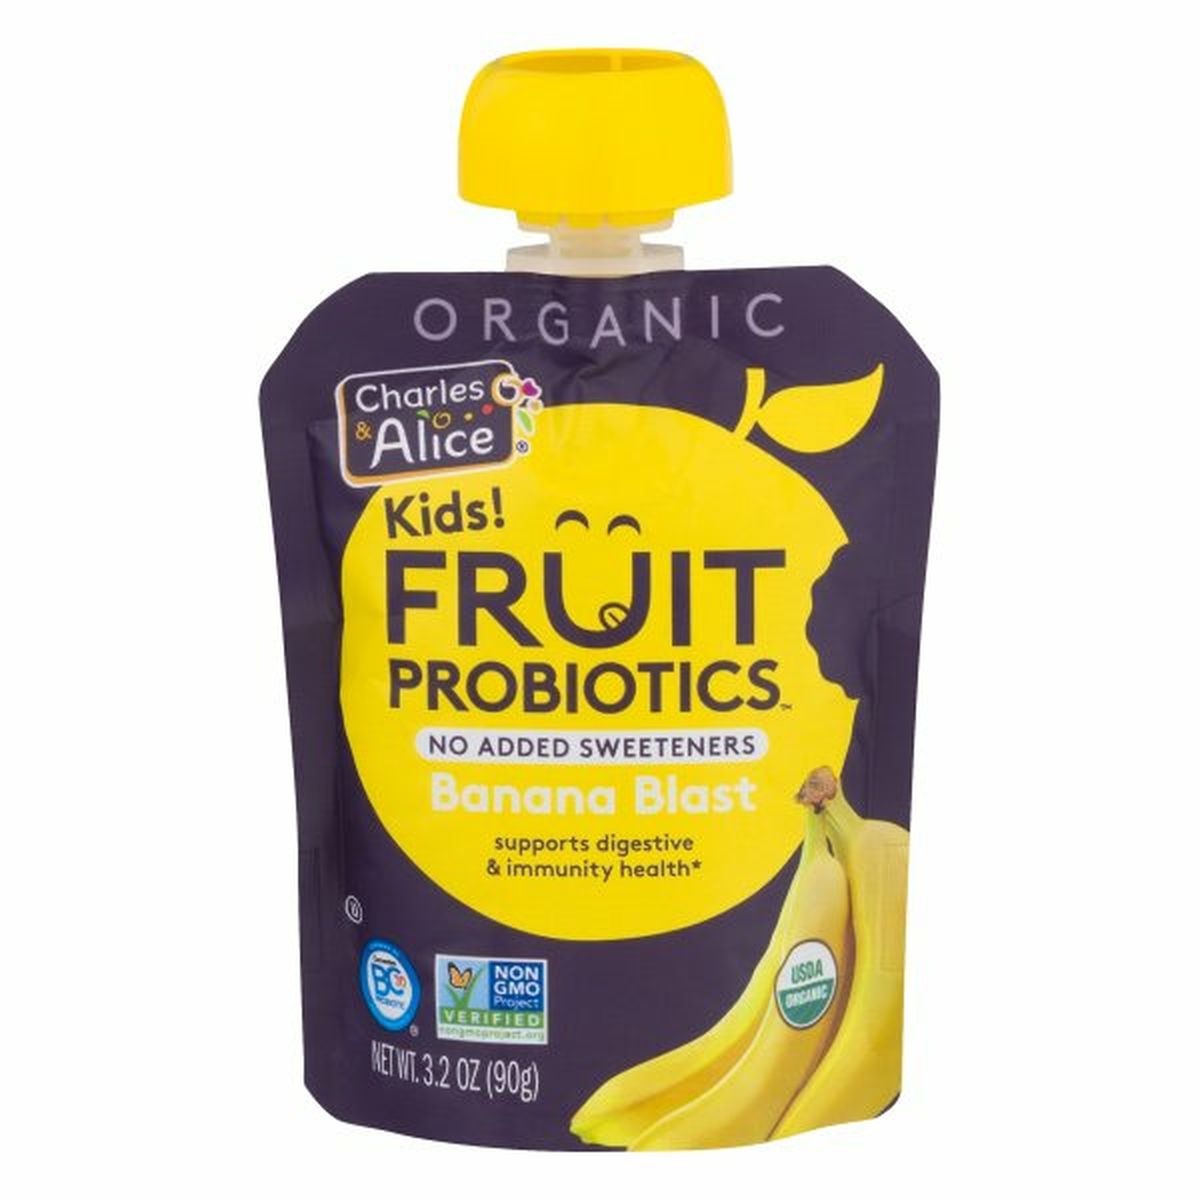 Calories in Charles & Alice Fruit Probiotics, Organic, Banana Blast, Kids